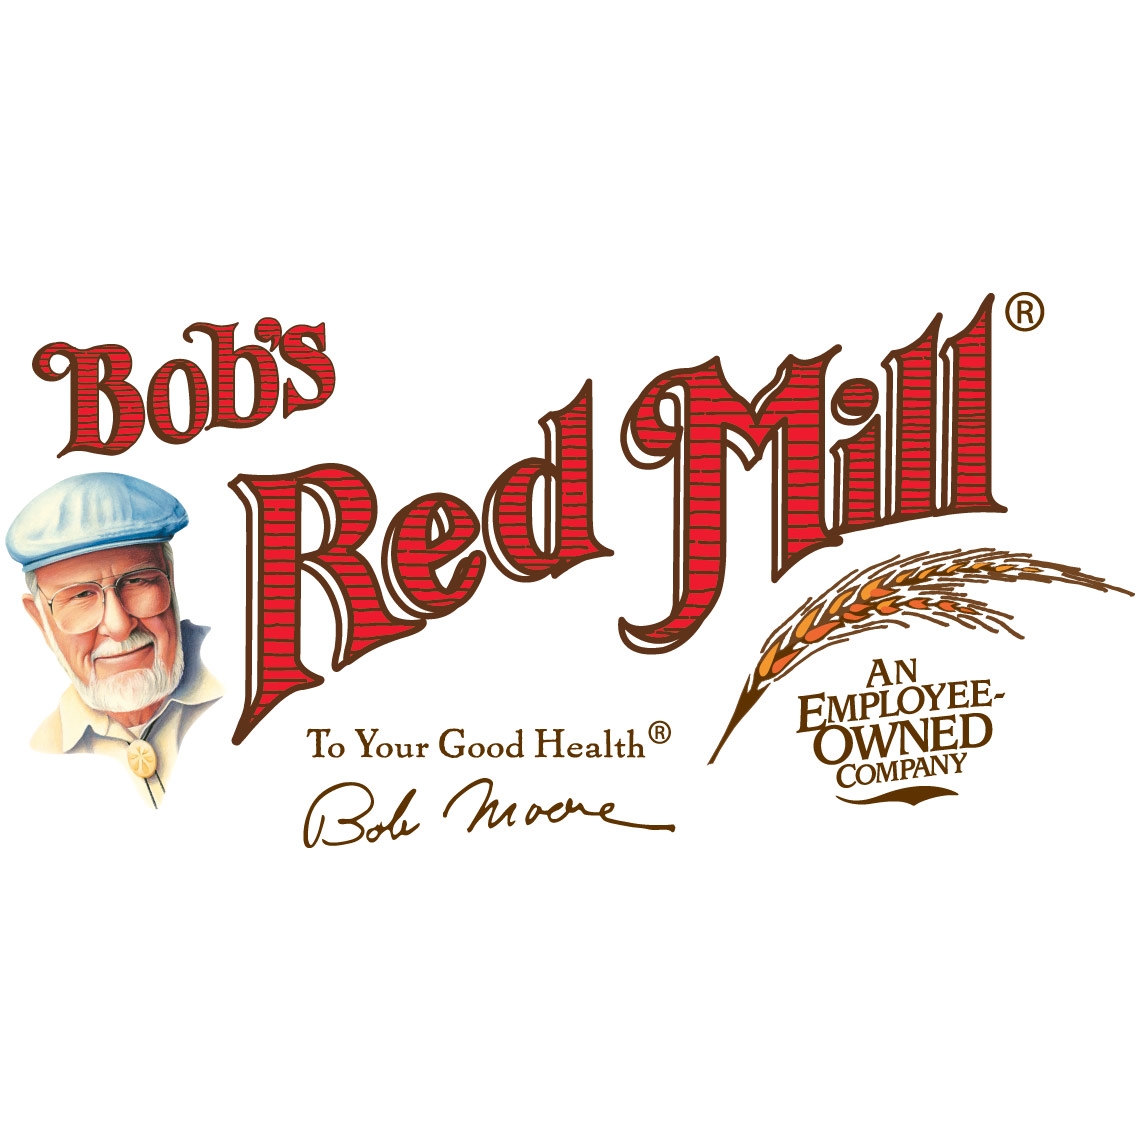 Baking Powder  Bob's Red Mill Natural Foods